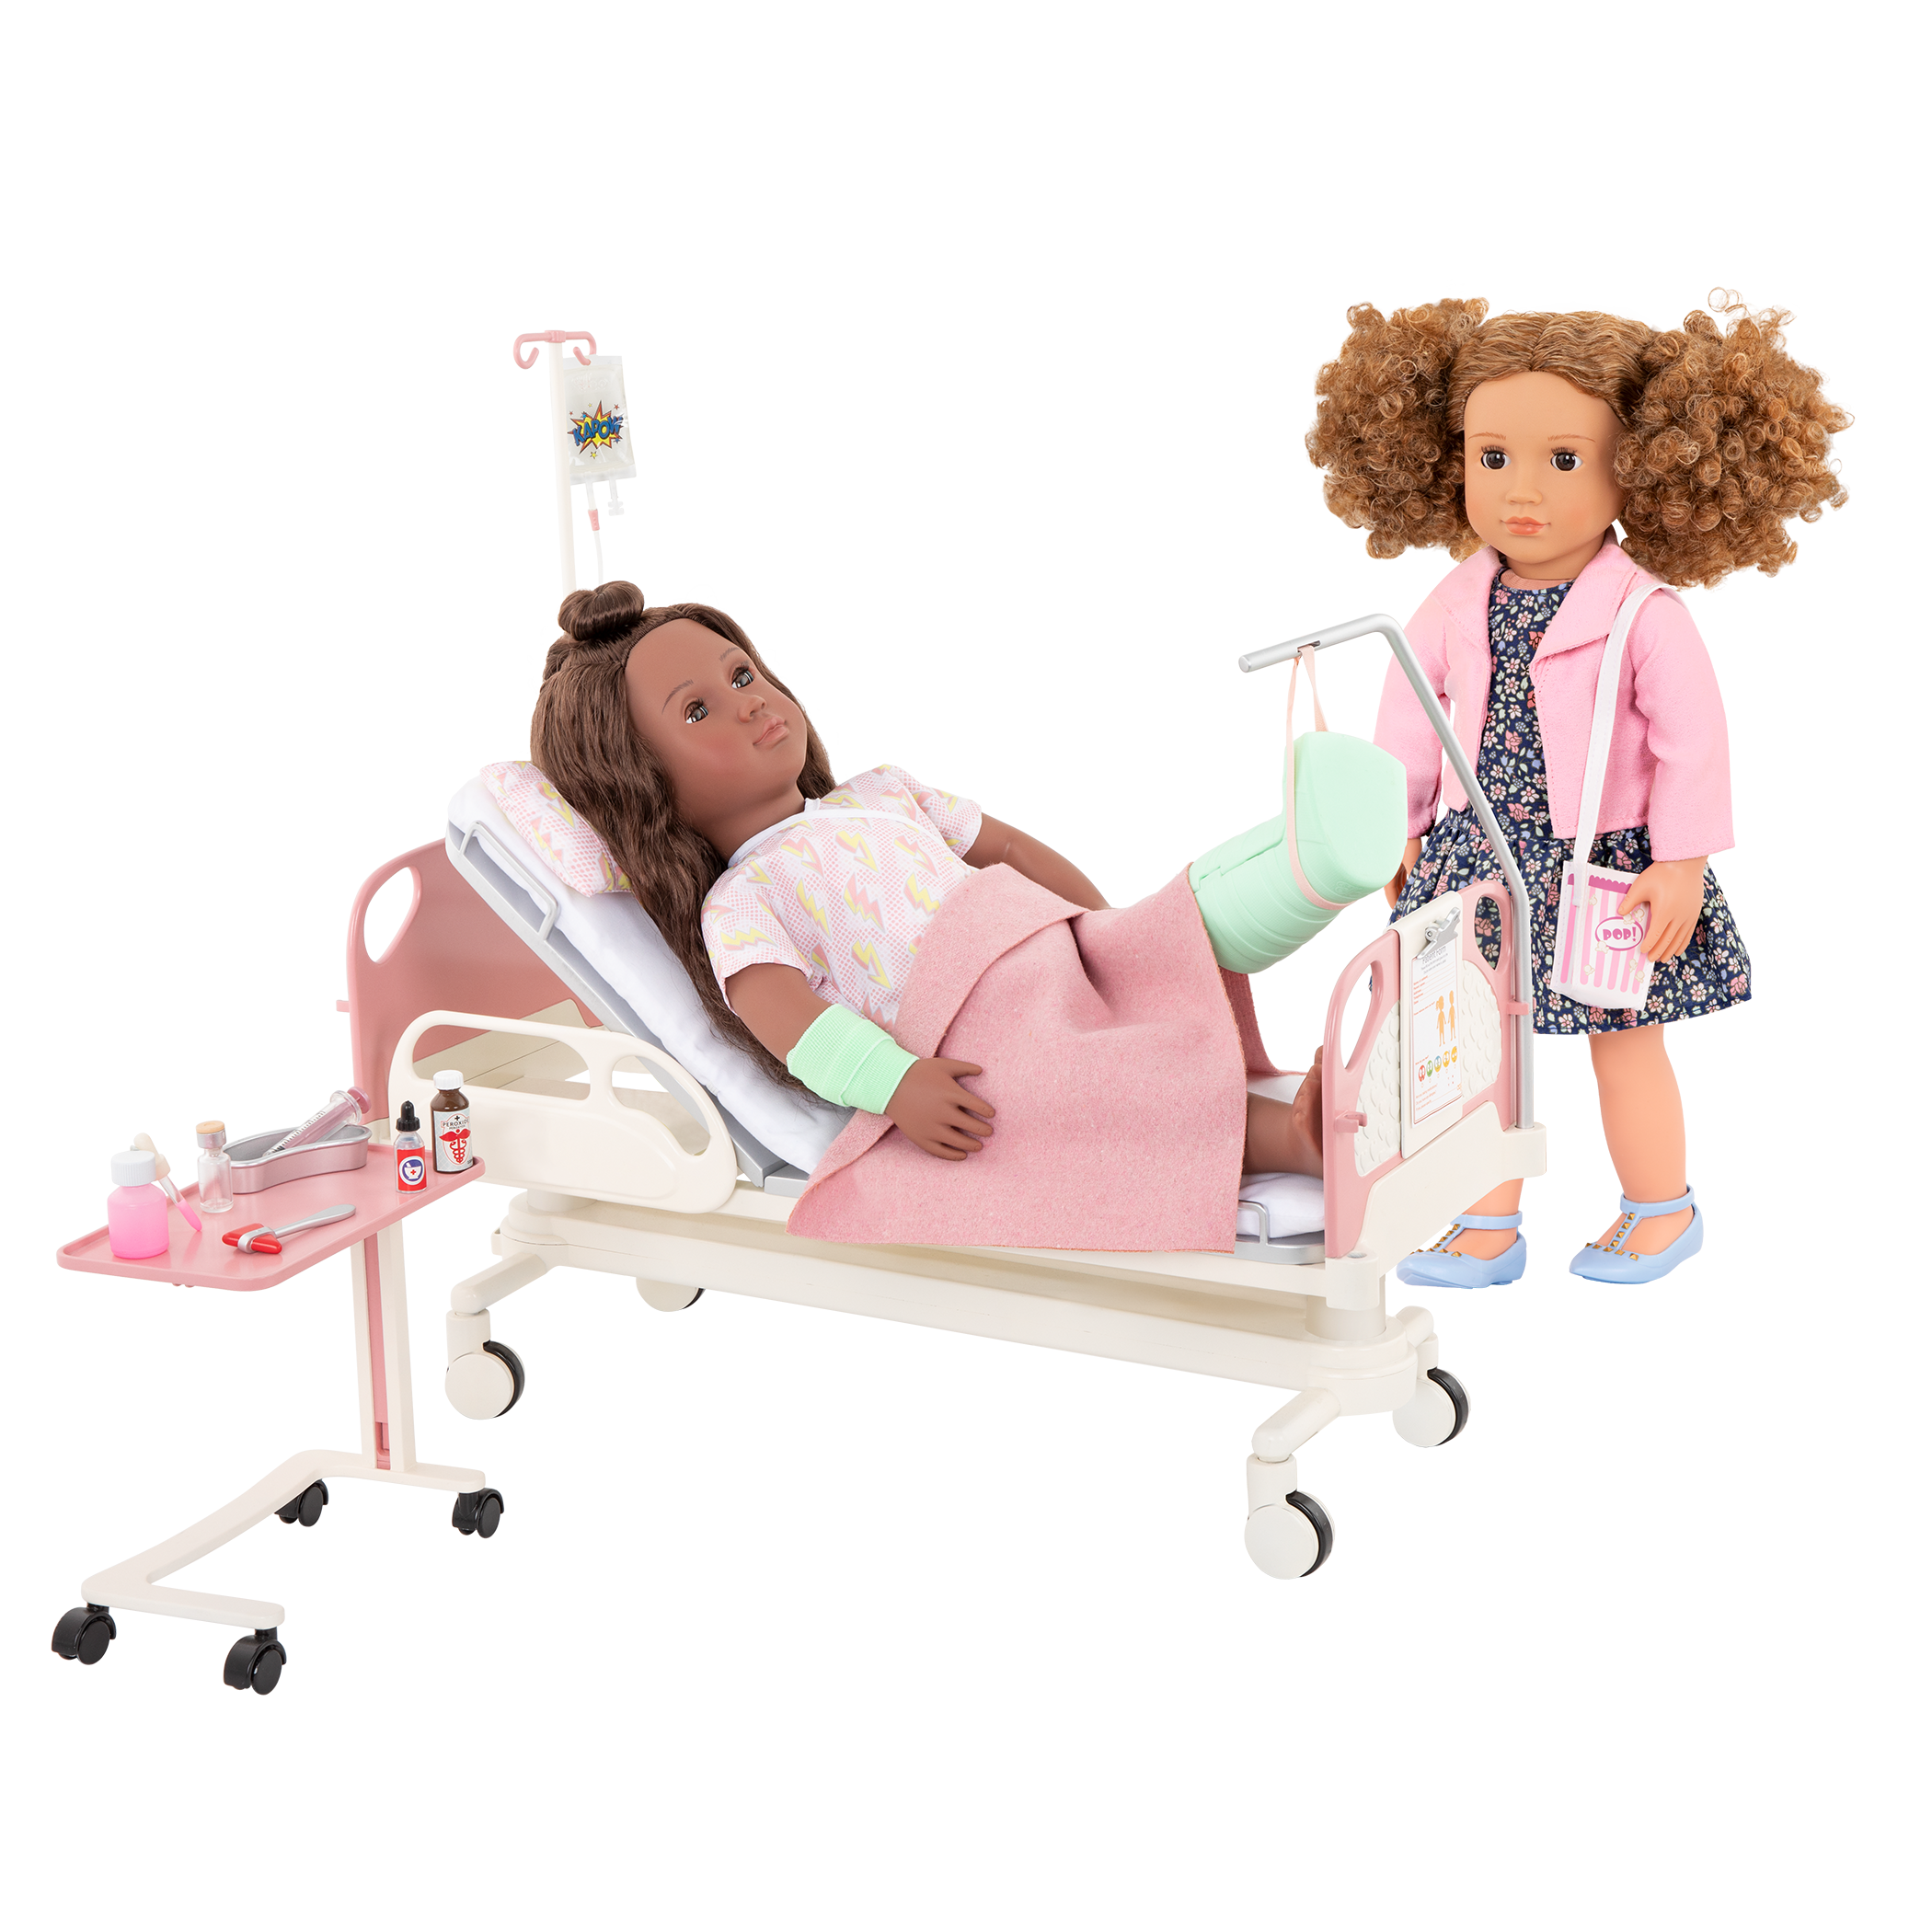 Two 18-inch dolls with hospital gurney playset